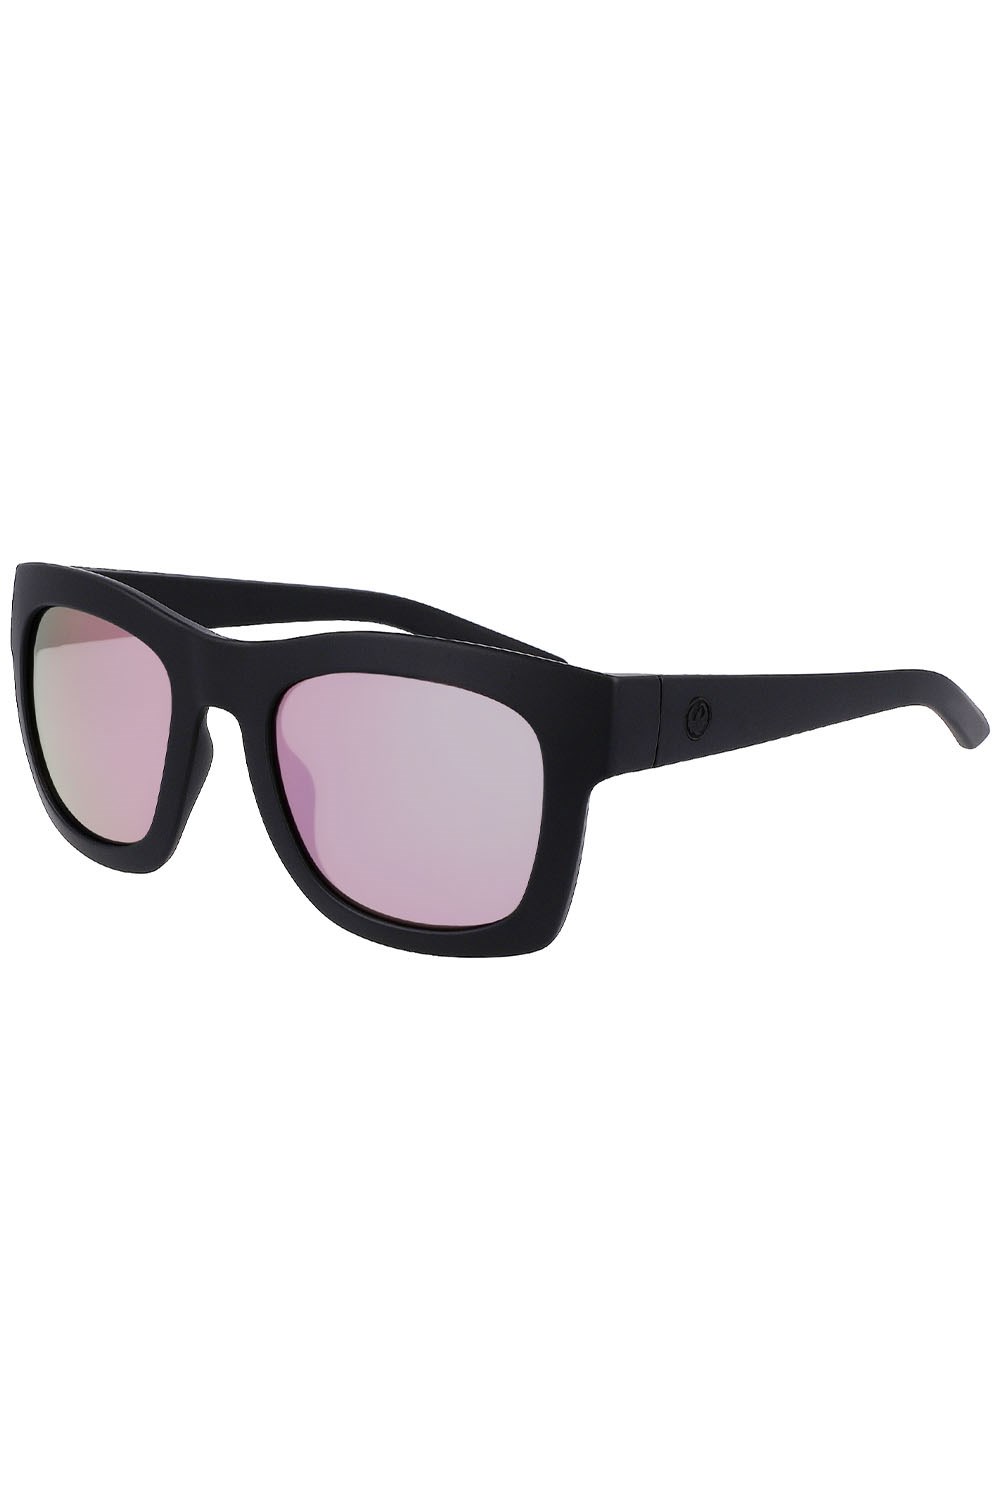 Waverly Womens Sunglasses -